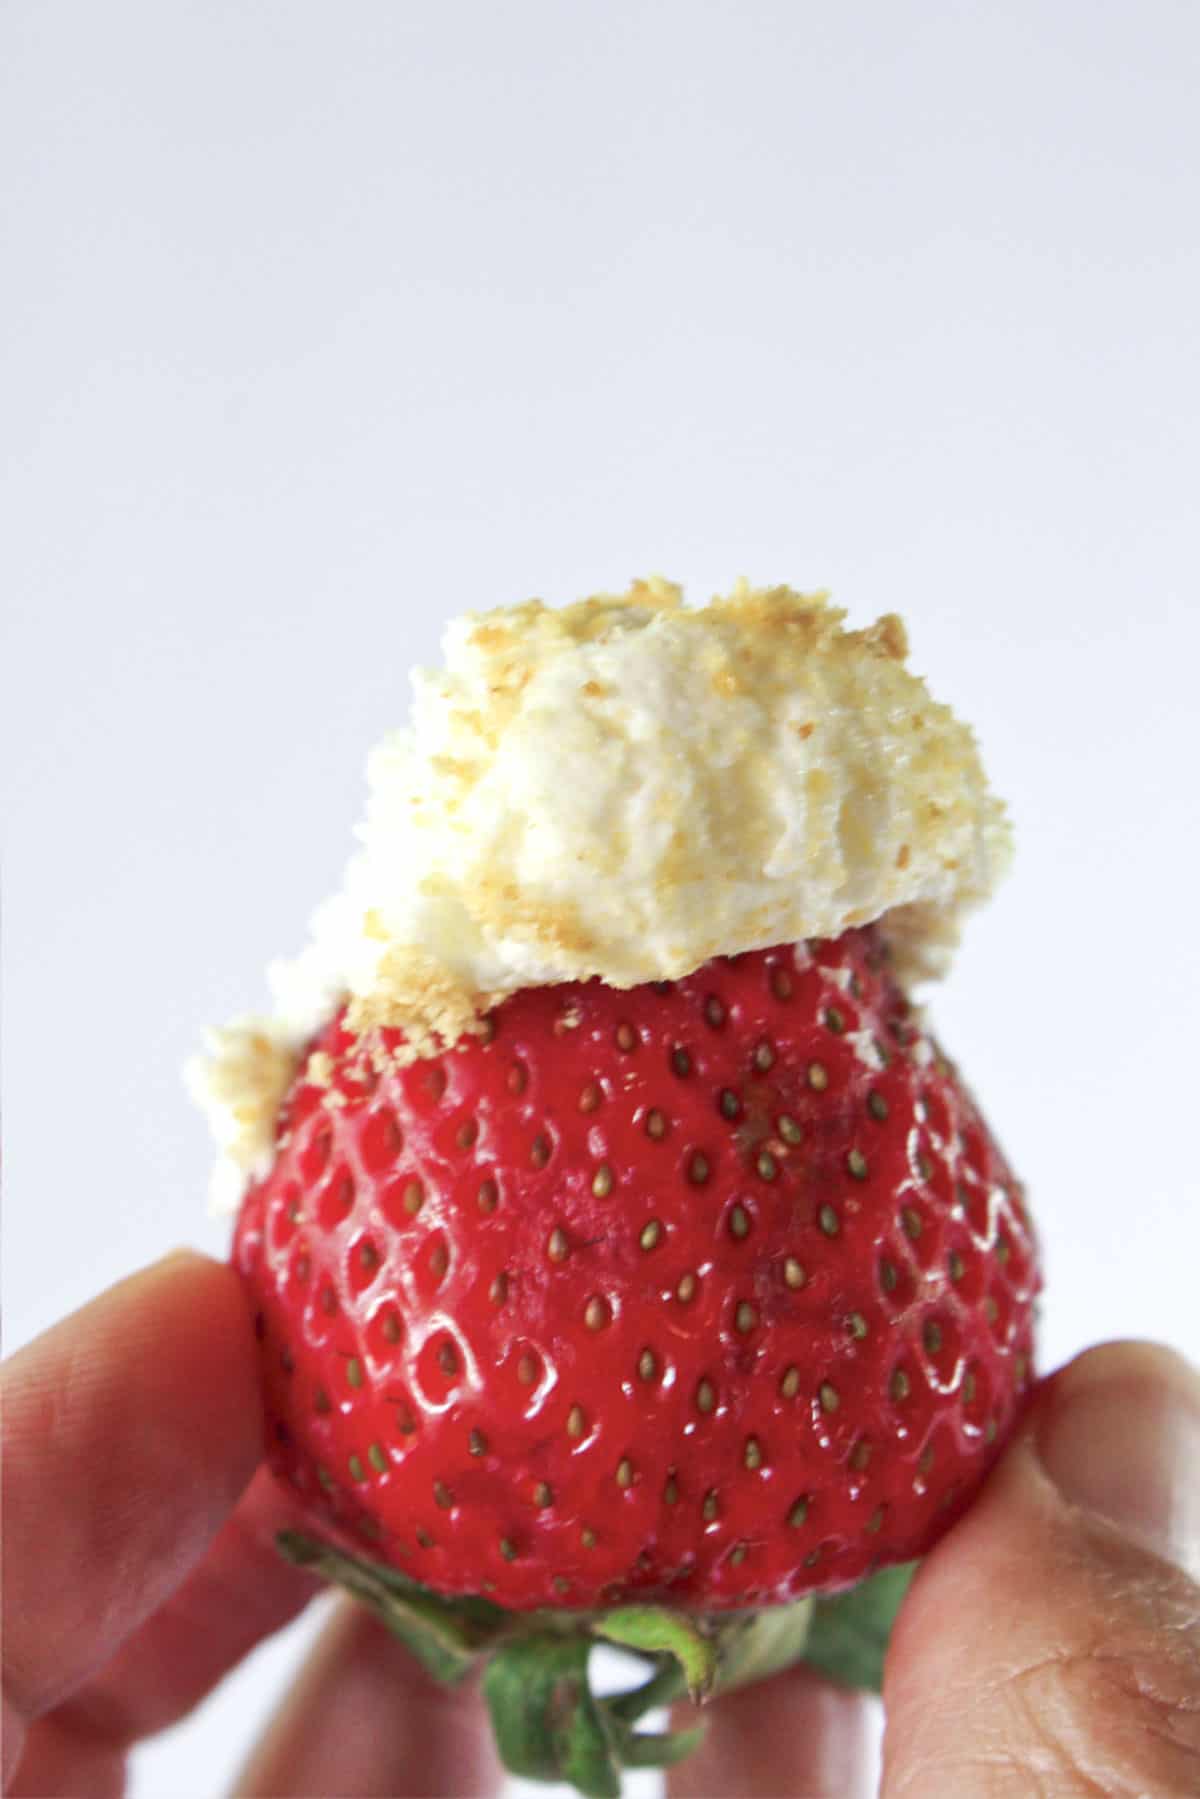 Cheesecake fruit dip on a fresh strawberry.